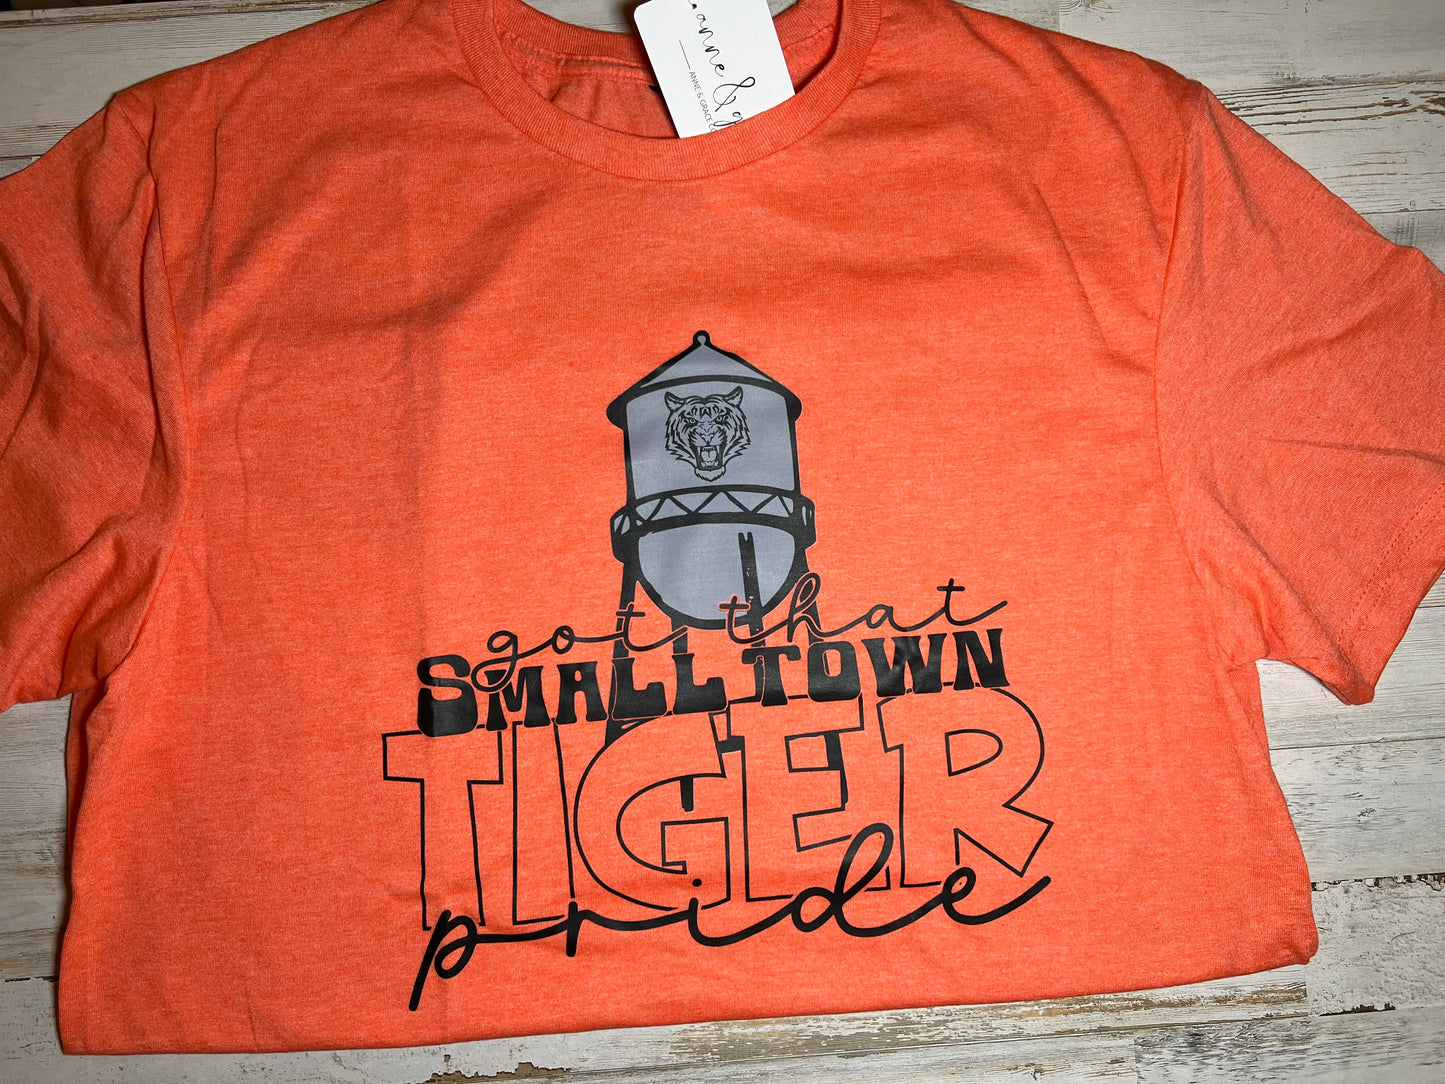 Got that small town Tiger Pride, heather orange tee